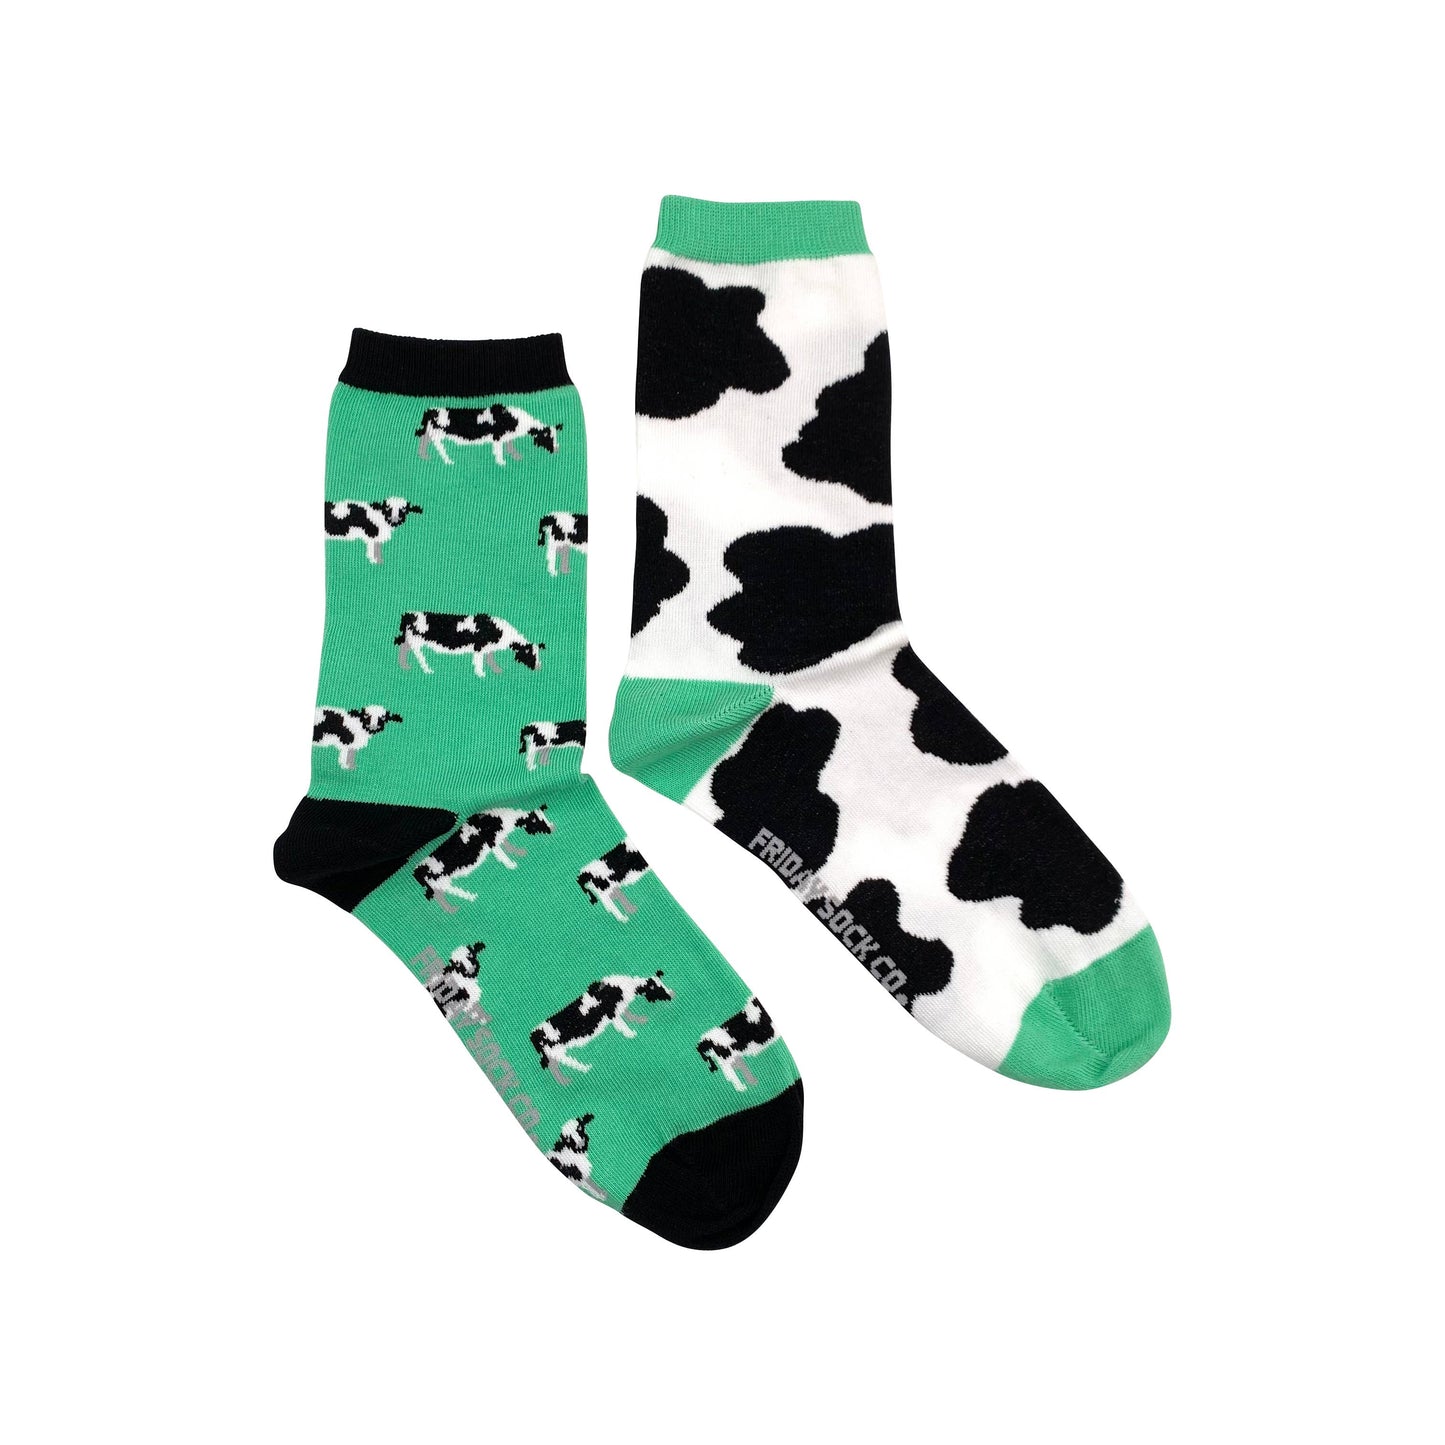 Women’s Socks | Cow Spots | Mismatched